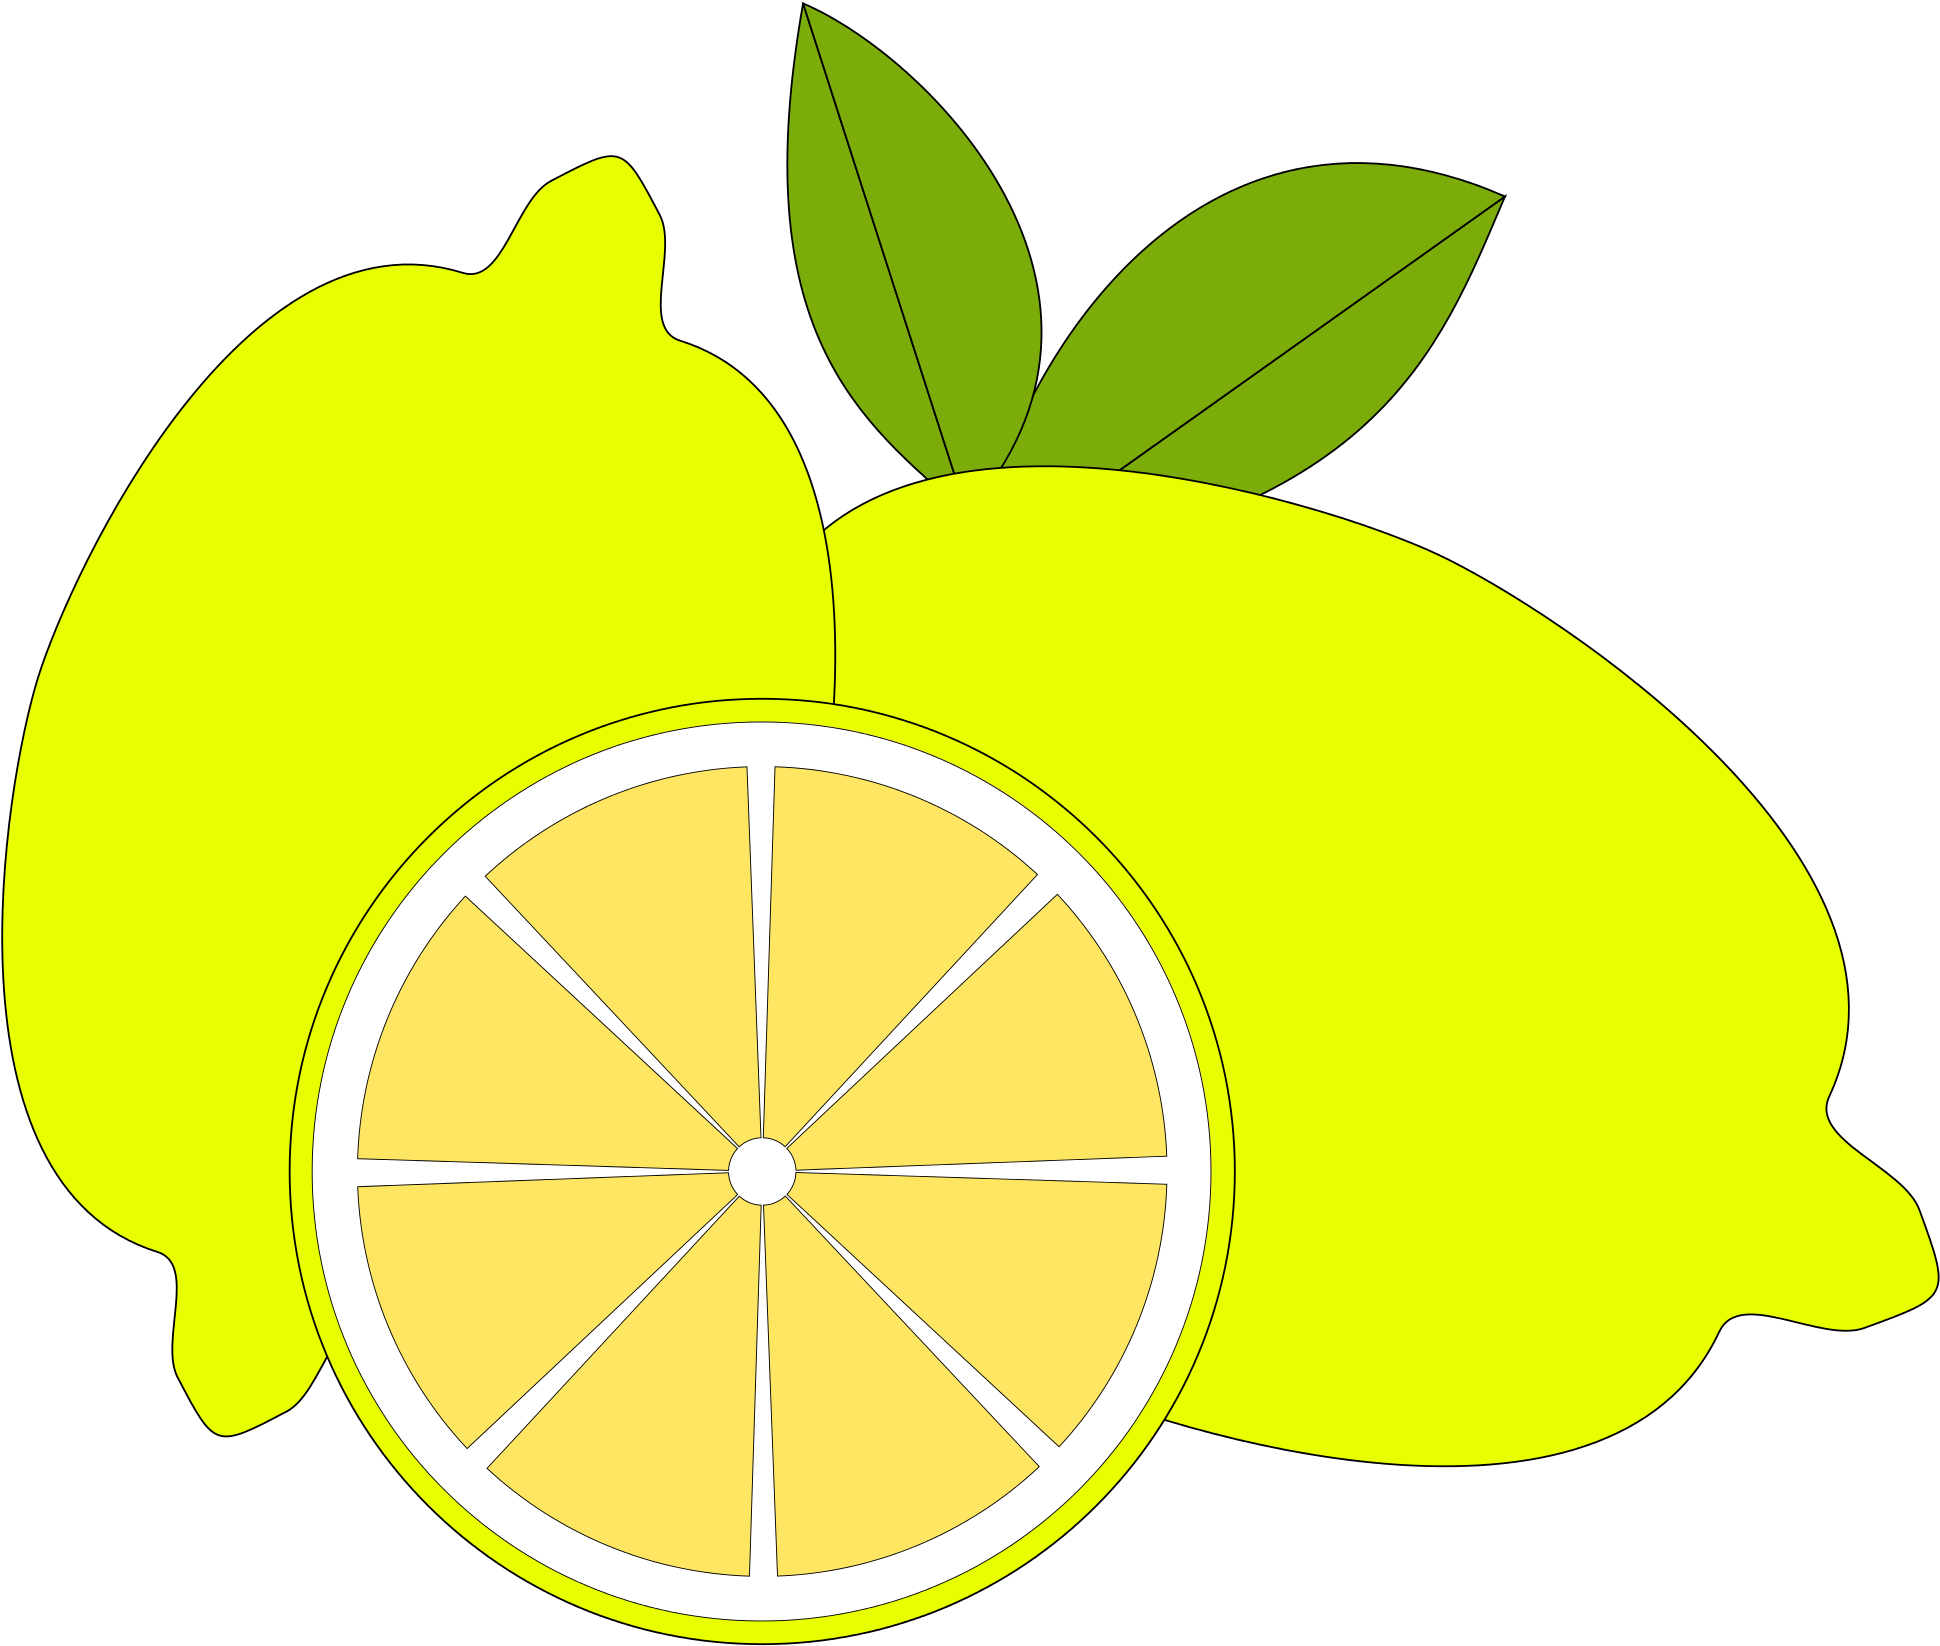 File - Lemons - Svg - Wikimedia Commons (2000x1678)